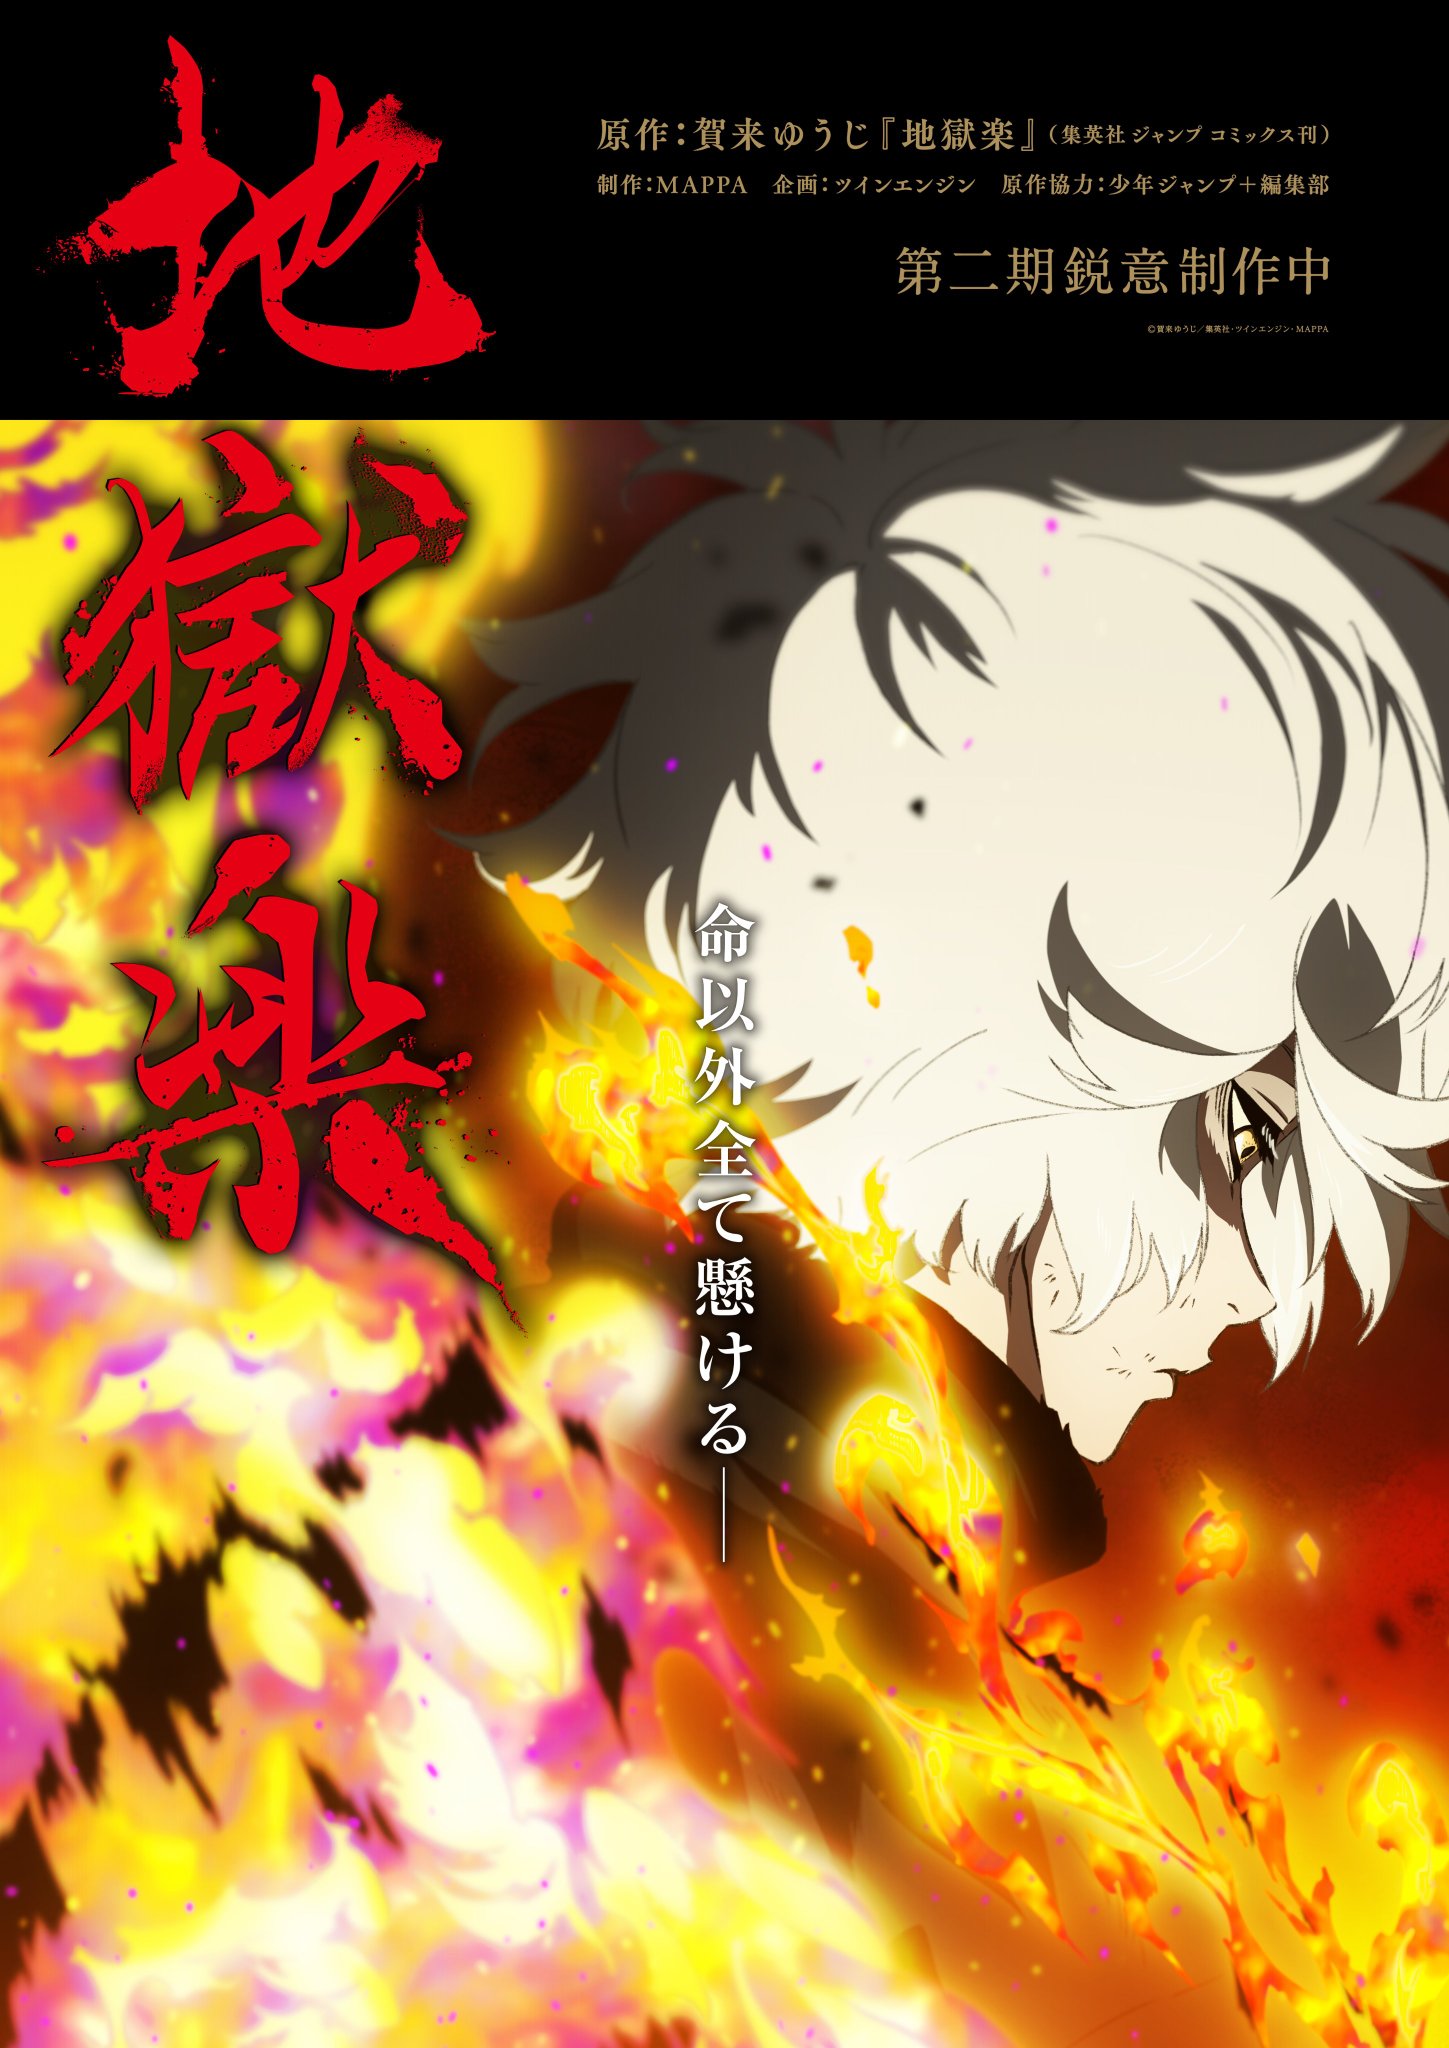 Shuumatsu no harem, capítulo 4 online sub español: fecha y hora de estreno  del anime, Crunchyroll, Manga, México, Japón, Animes